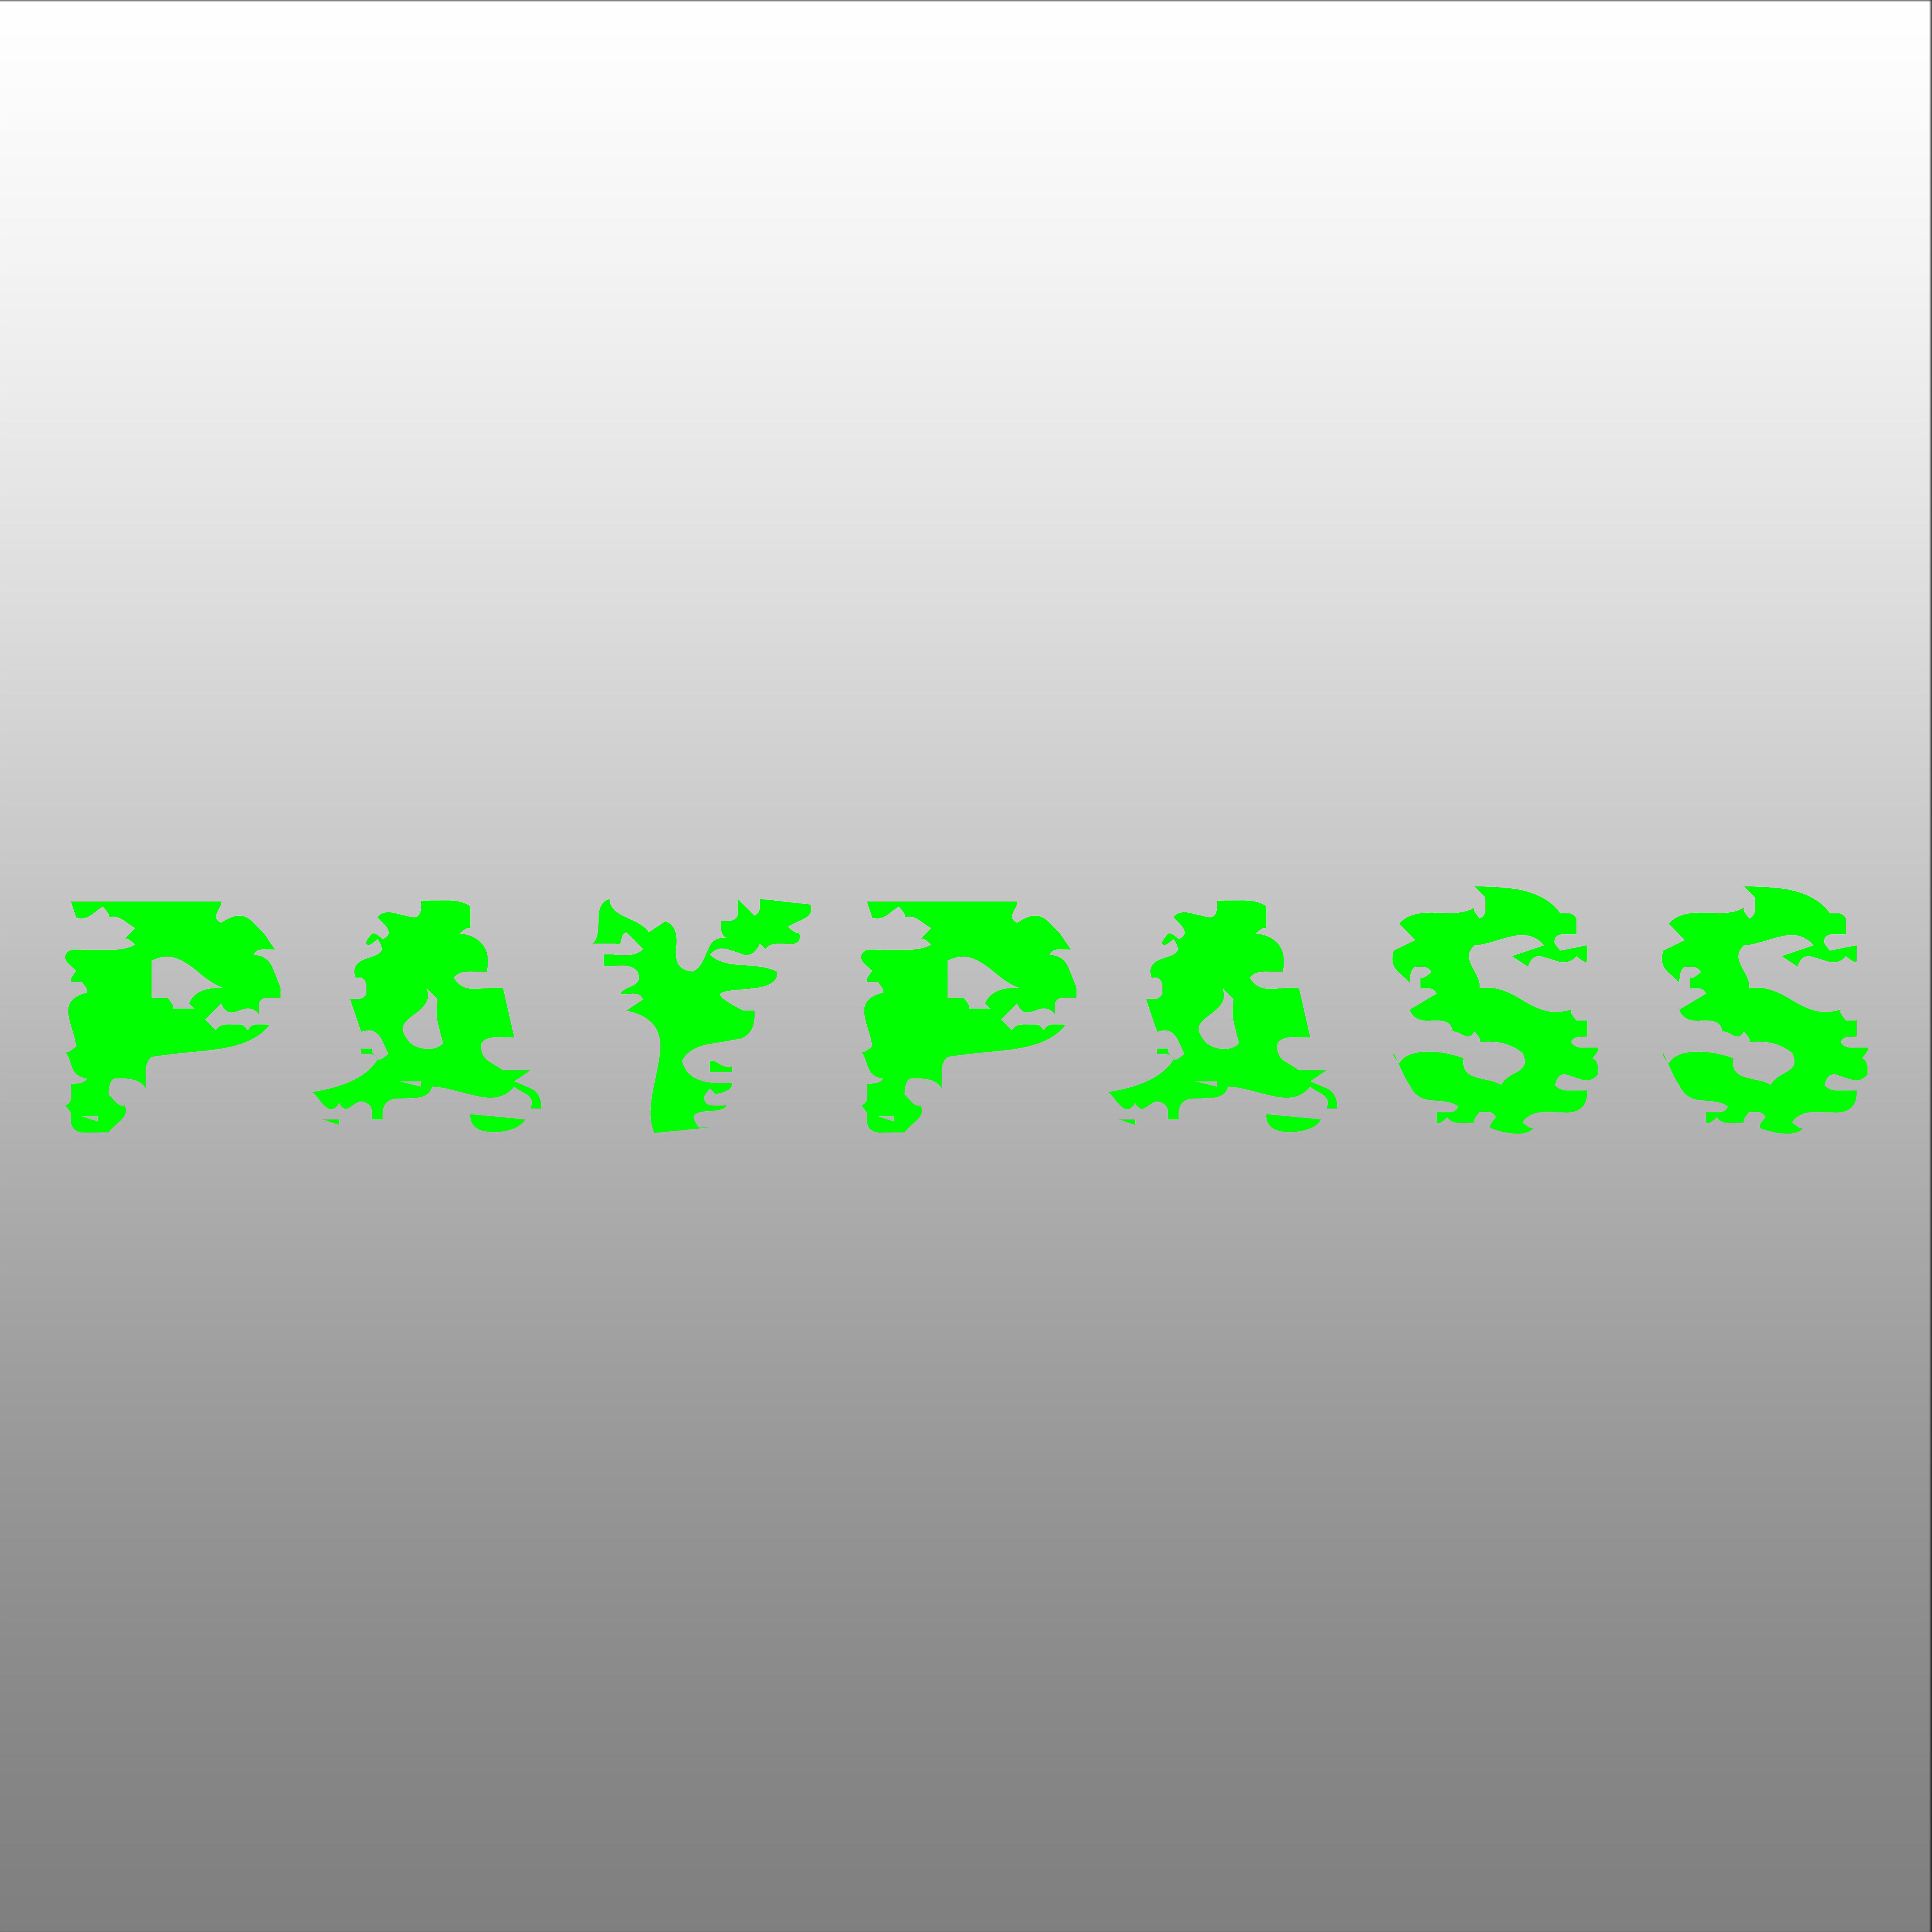 Постер альбома Paypass